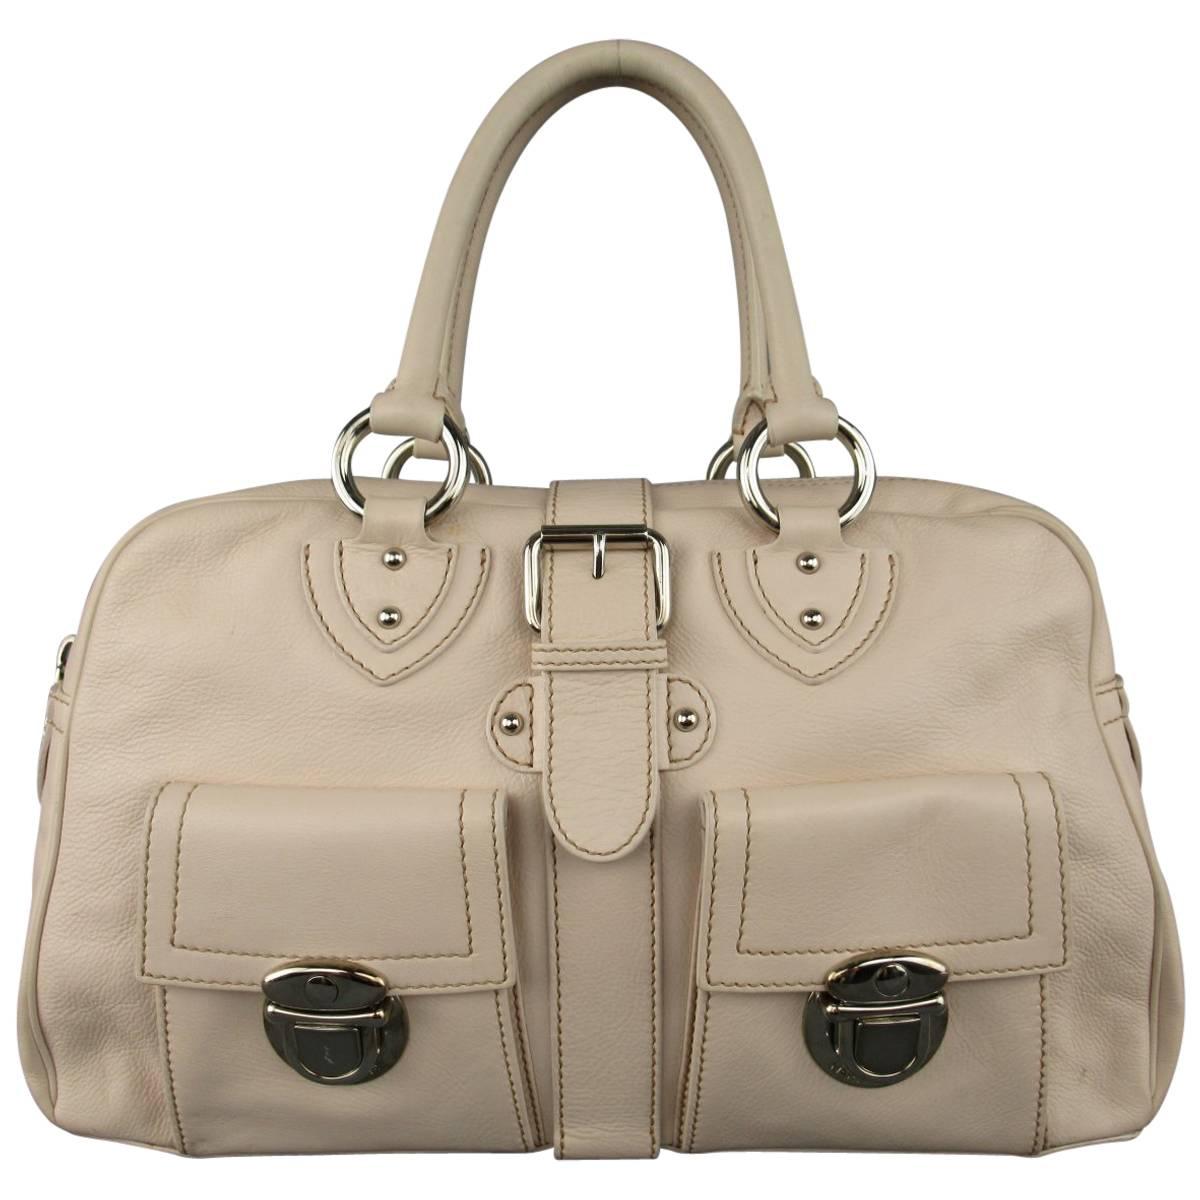 MARC JACOBS Cream Beige Leather 2 Pocket Top Handles VENETA Handbag